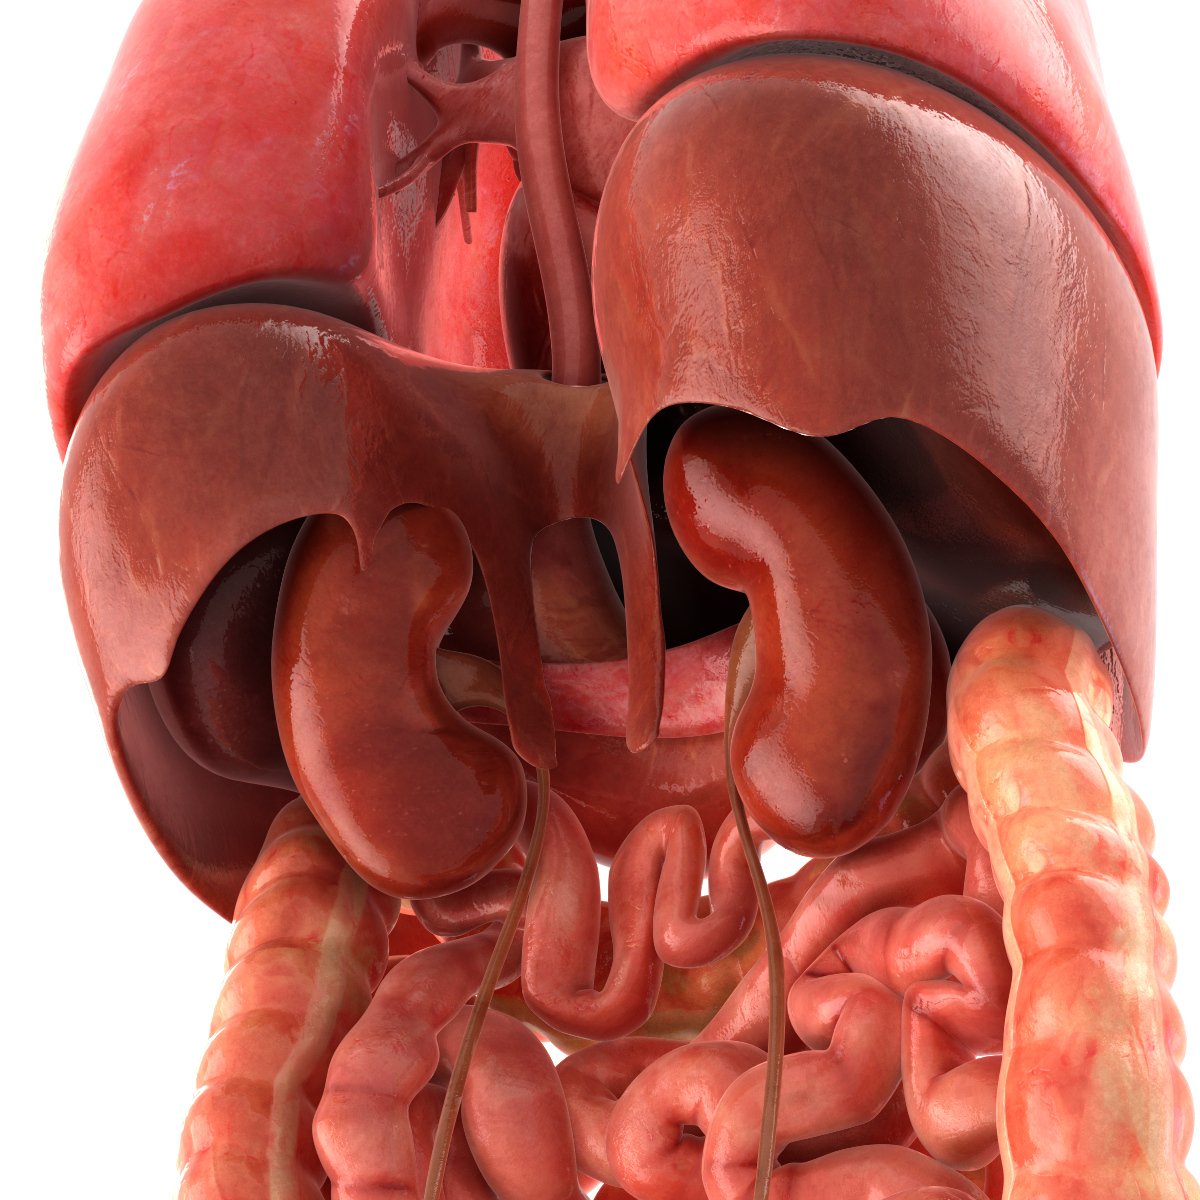 Human Internal Organs 3d Model In Anatomy 3dexport